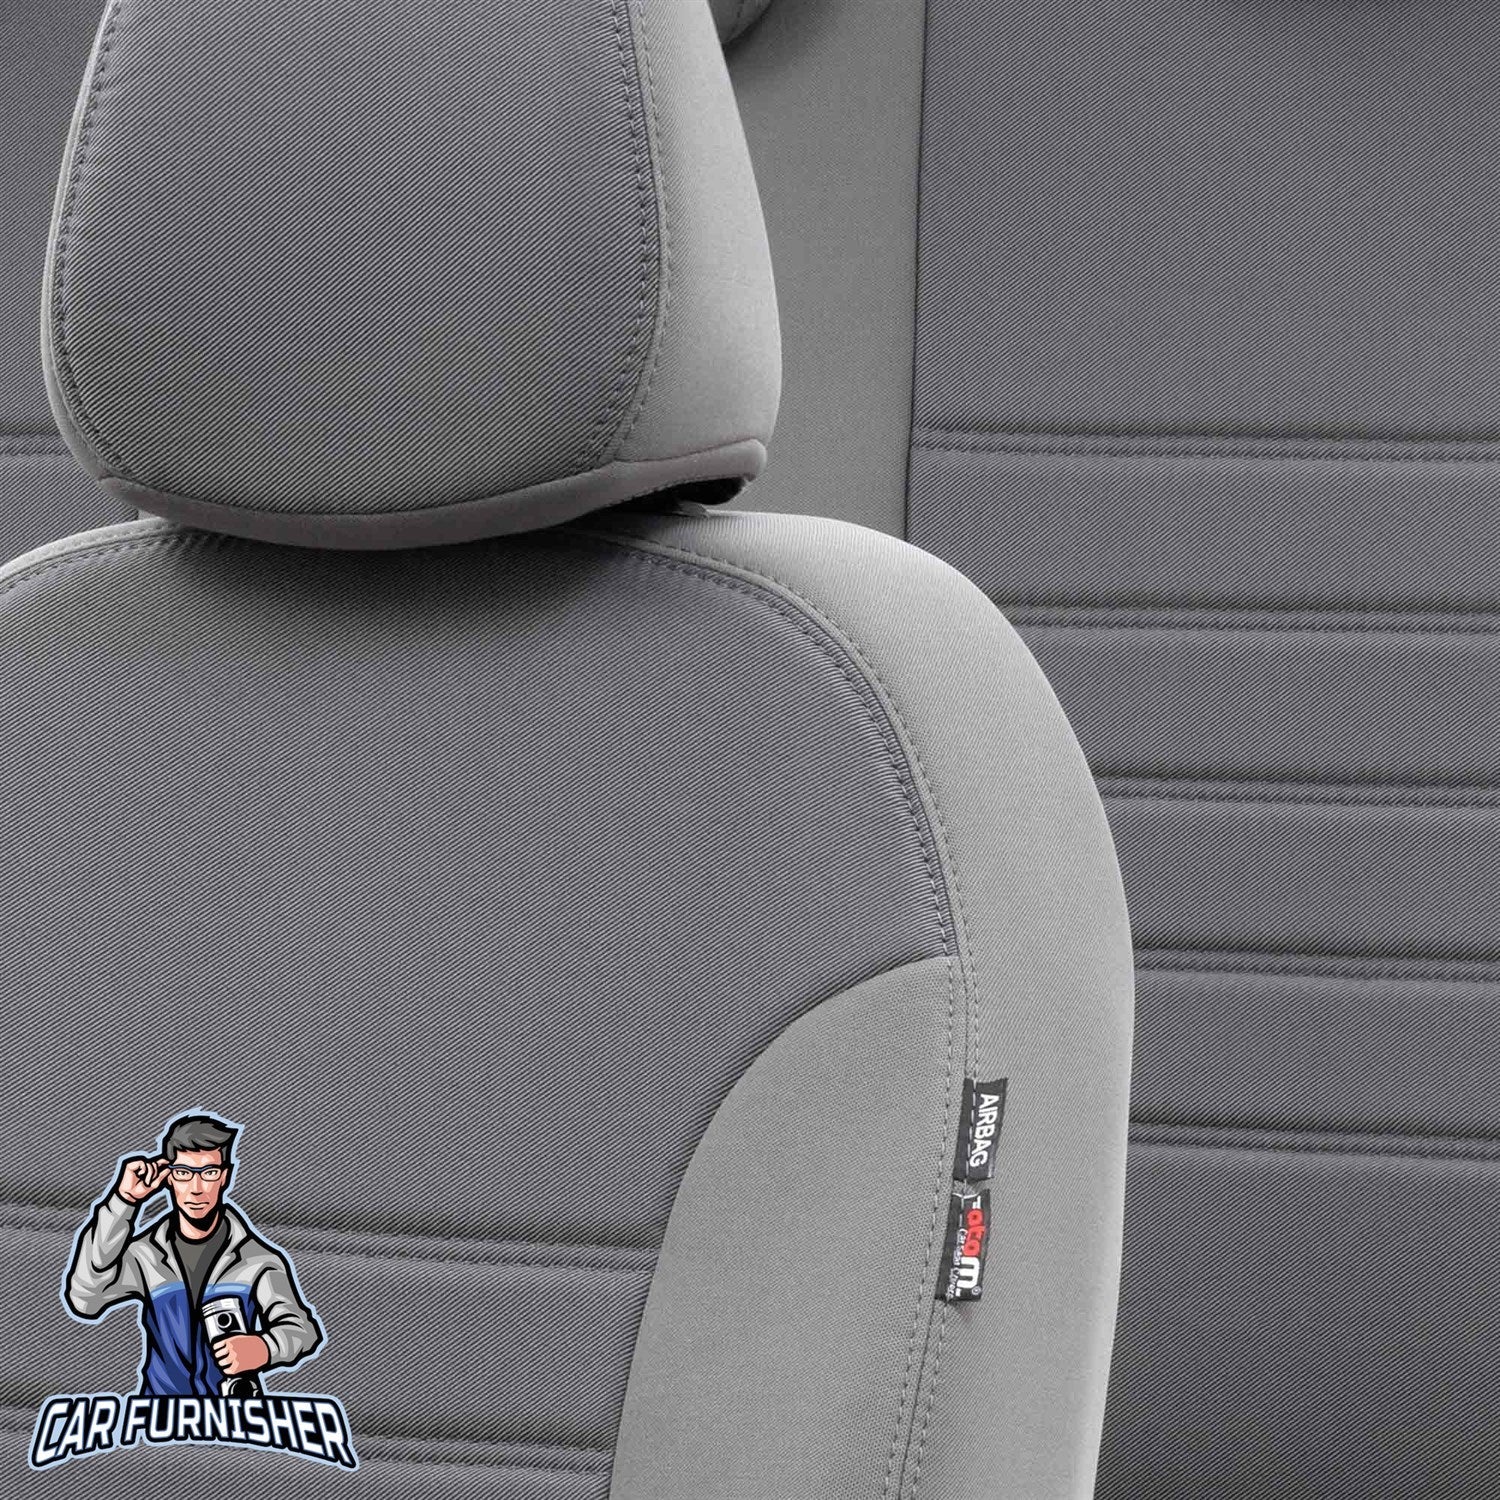 Mercedes B Class Seat Covers Original Jacquard Design Gray Jacquard Fabric